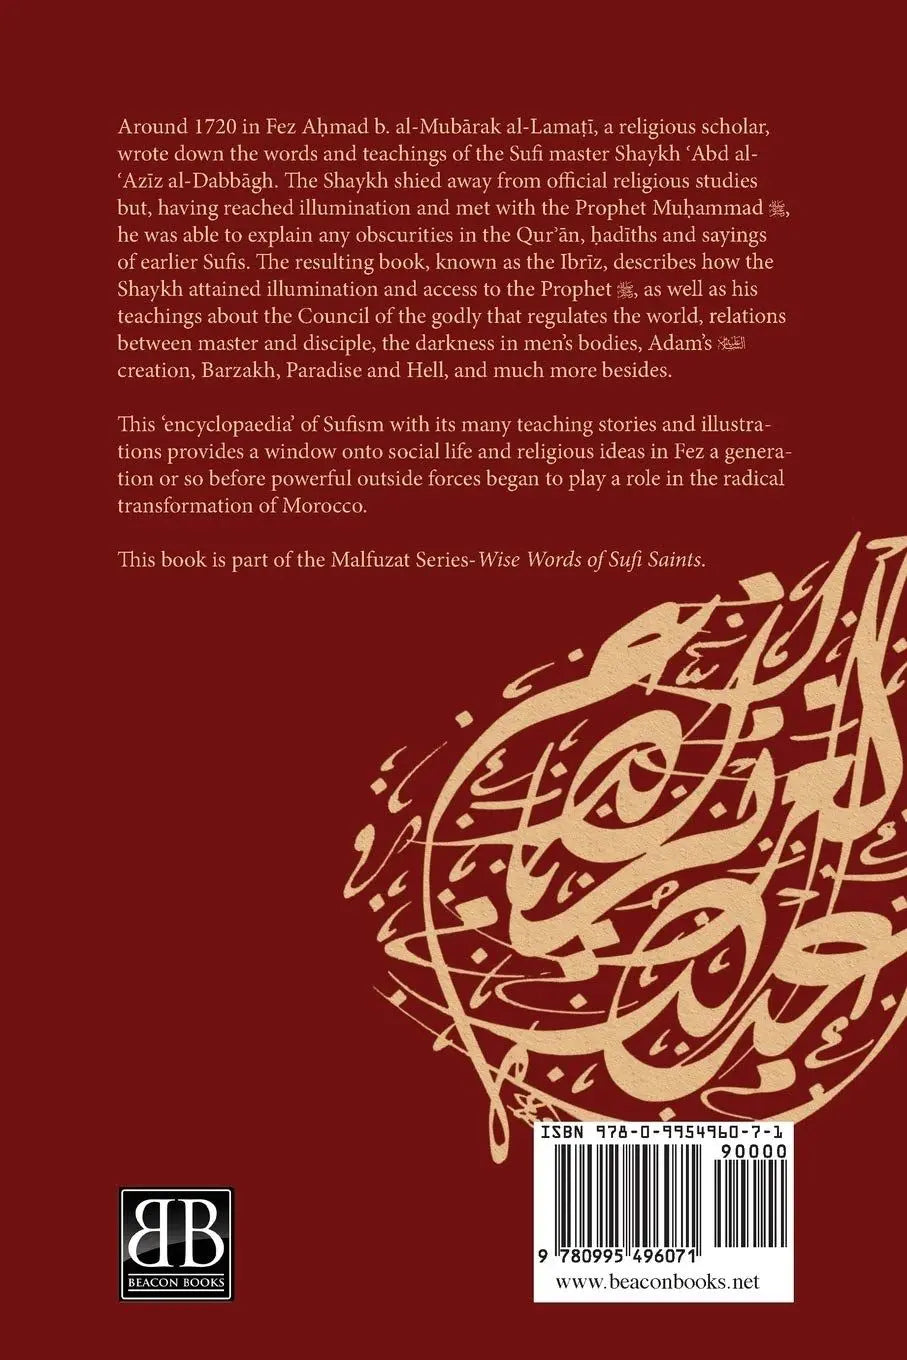 Pure Gold from the Words of Sayyidi Abd al-Aziz al-Dabbagh